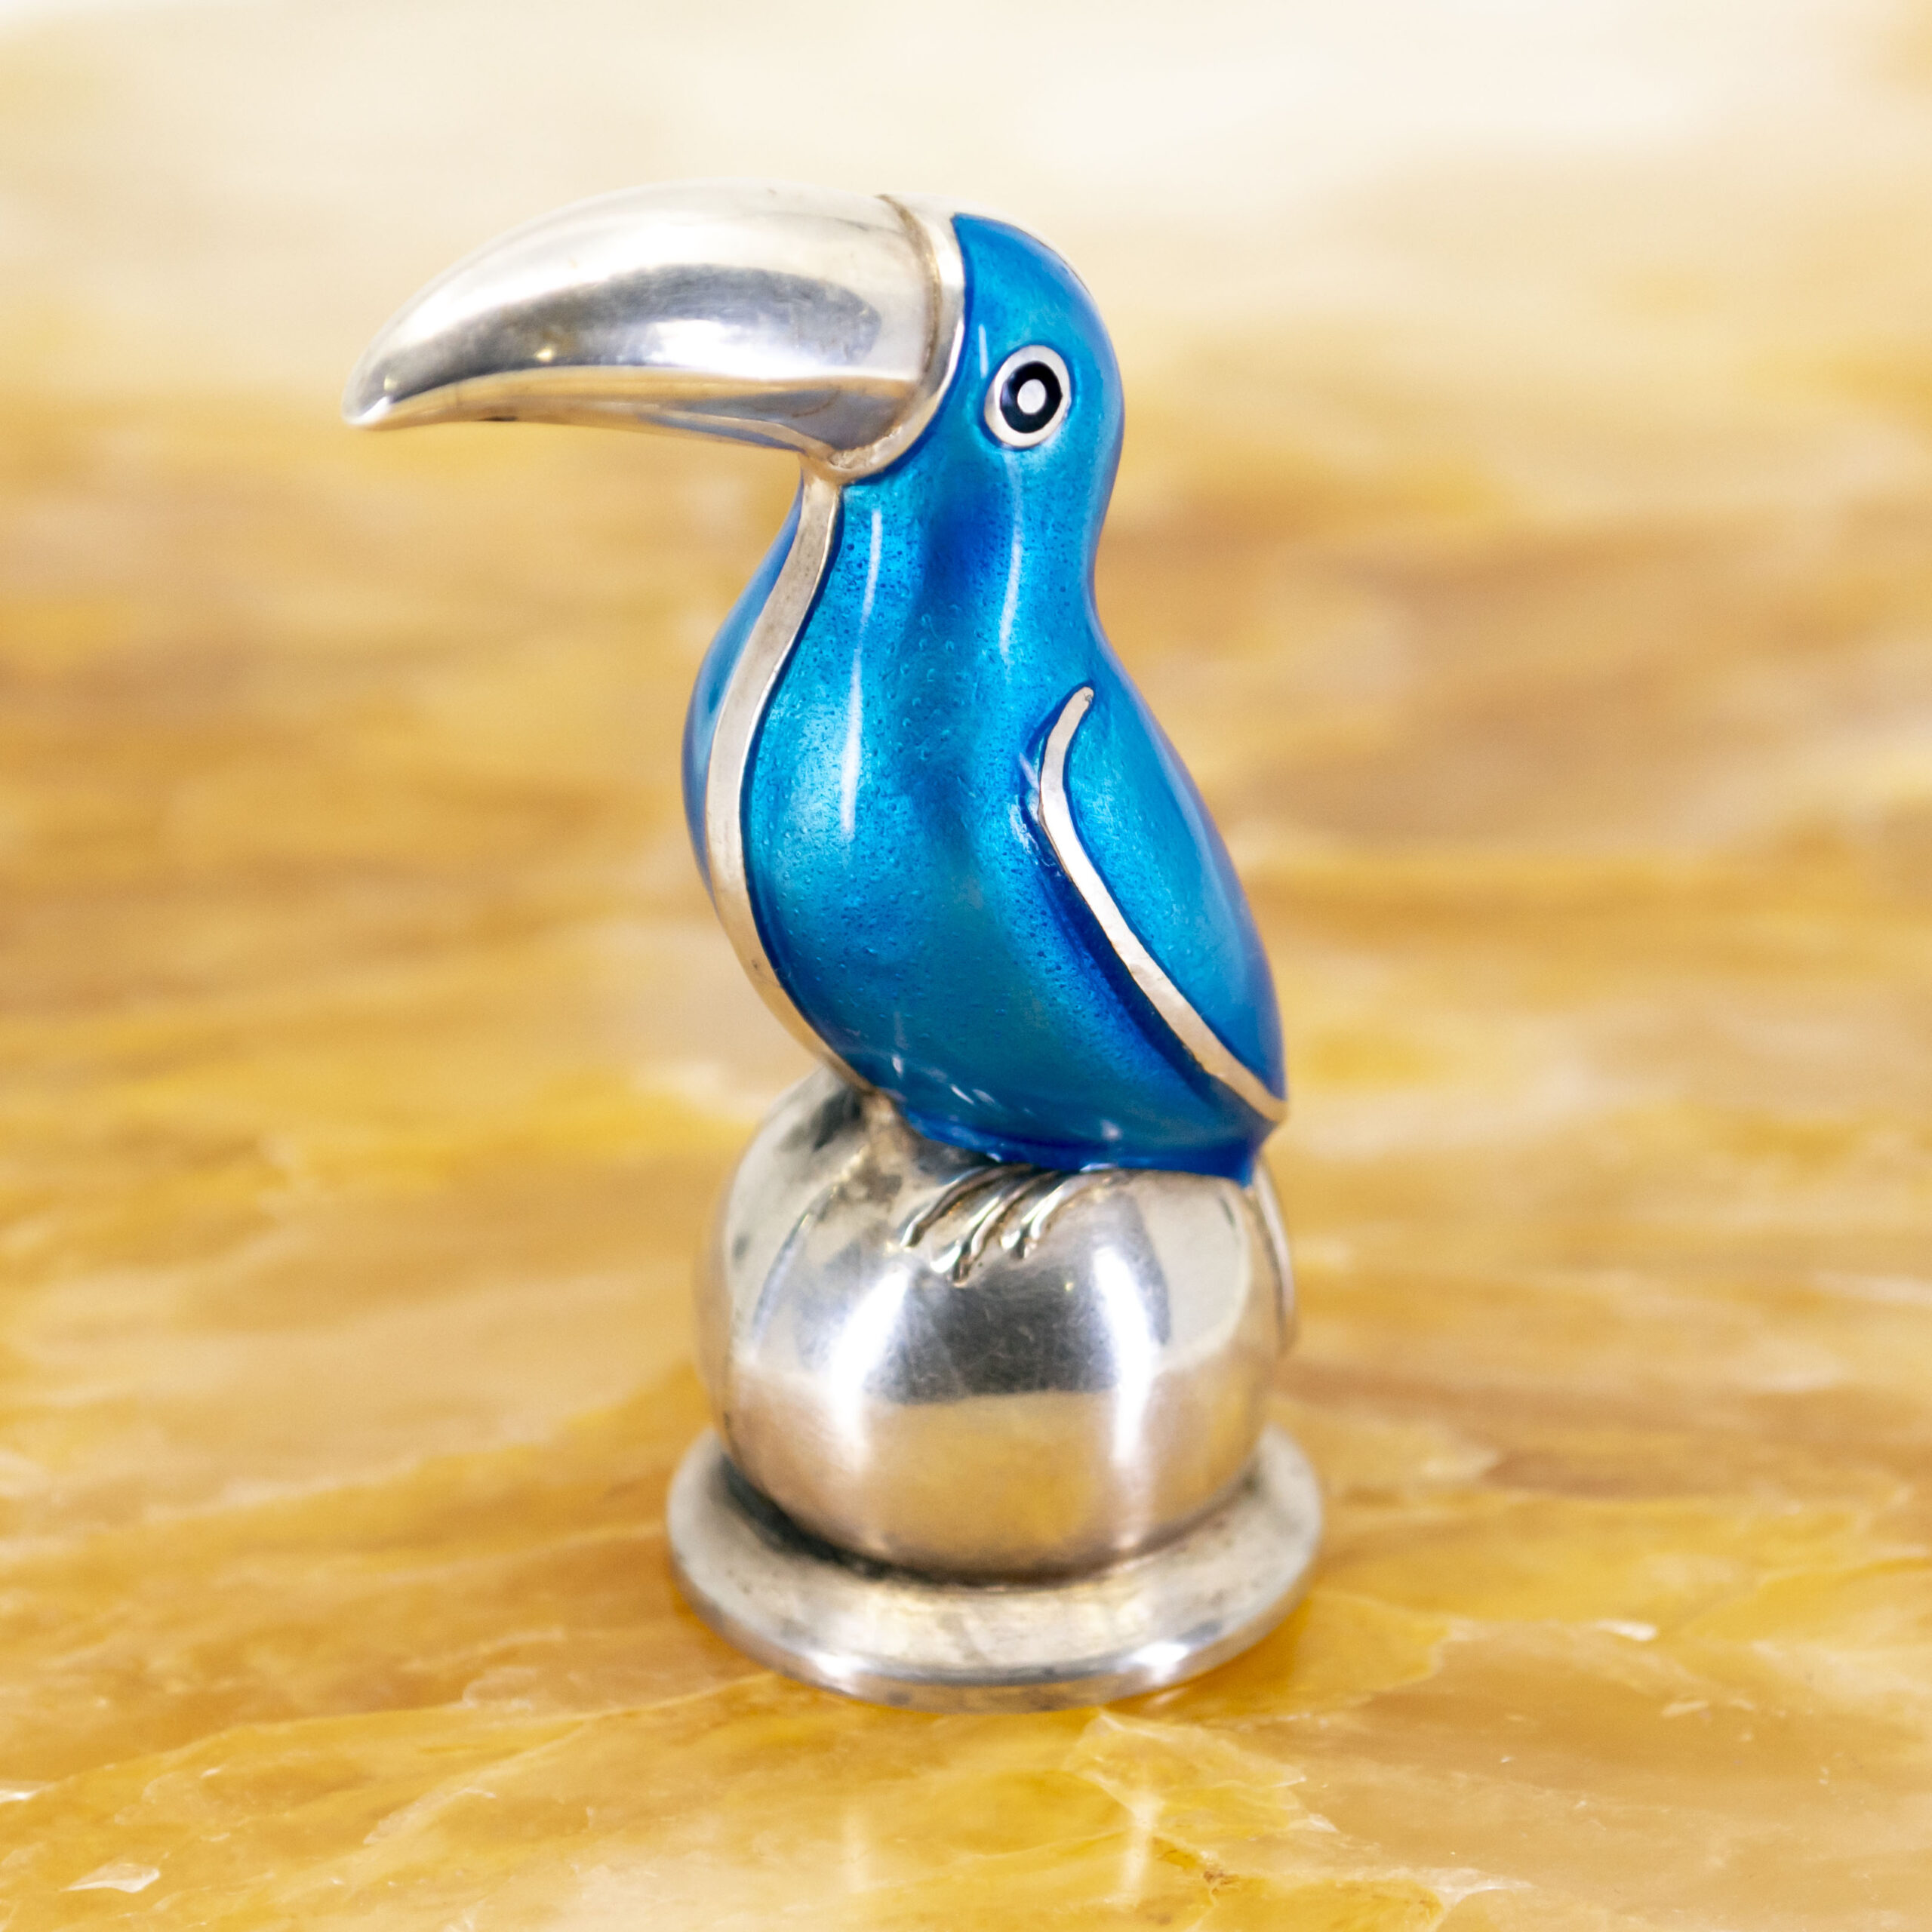 kevinsgiftshoppe Ceramic Robin Bird Magnetic Salt & Pepper Shakers, Home  Décor, Gift for Her, Gift for Mom, Kitchen Décor, Birdwatcher Gift